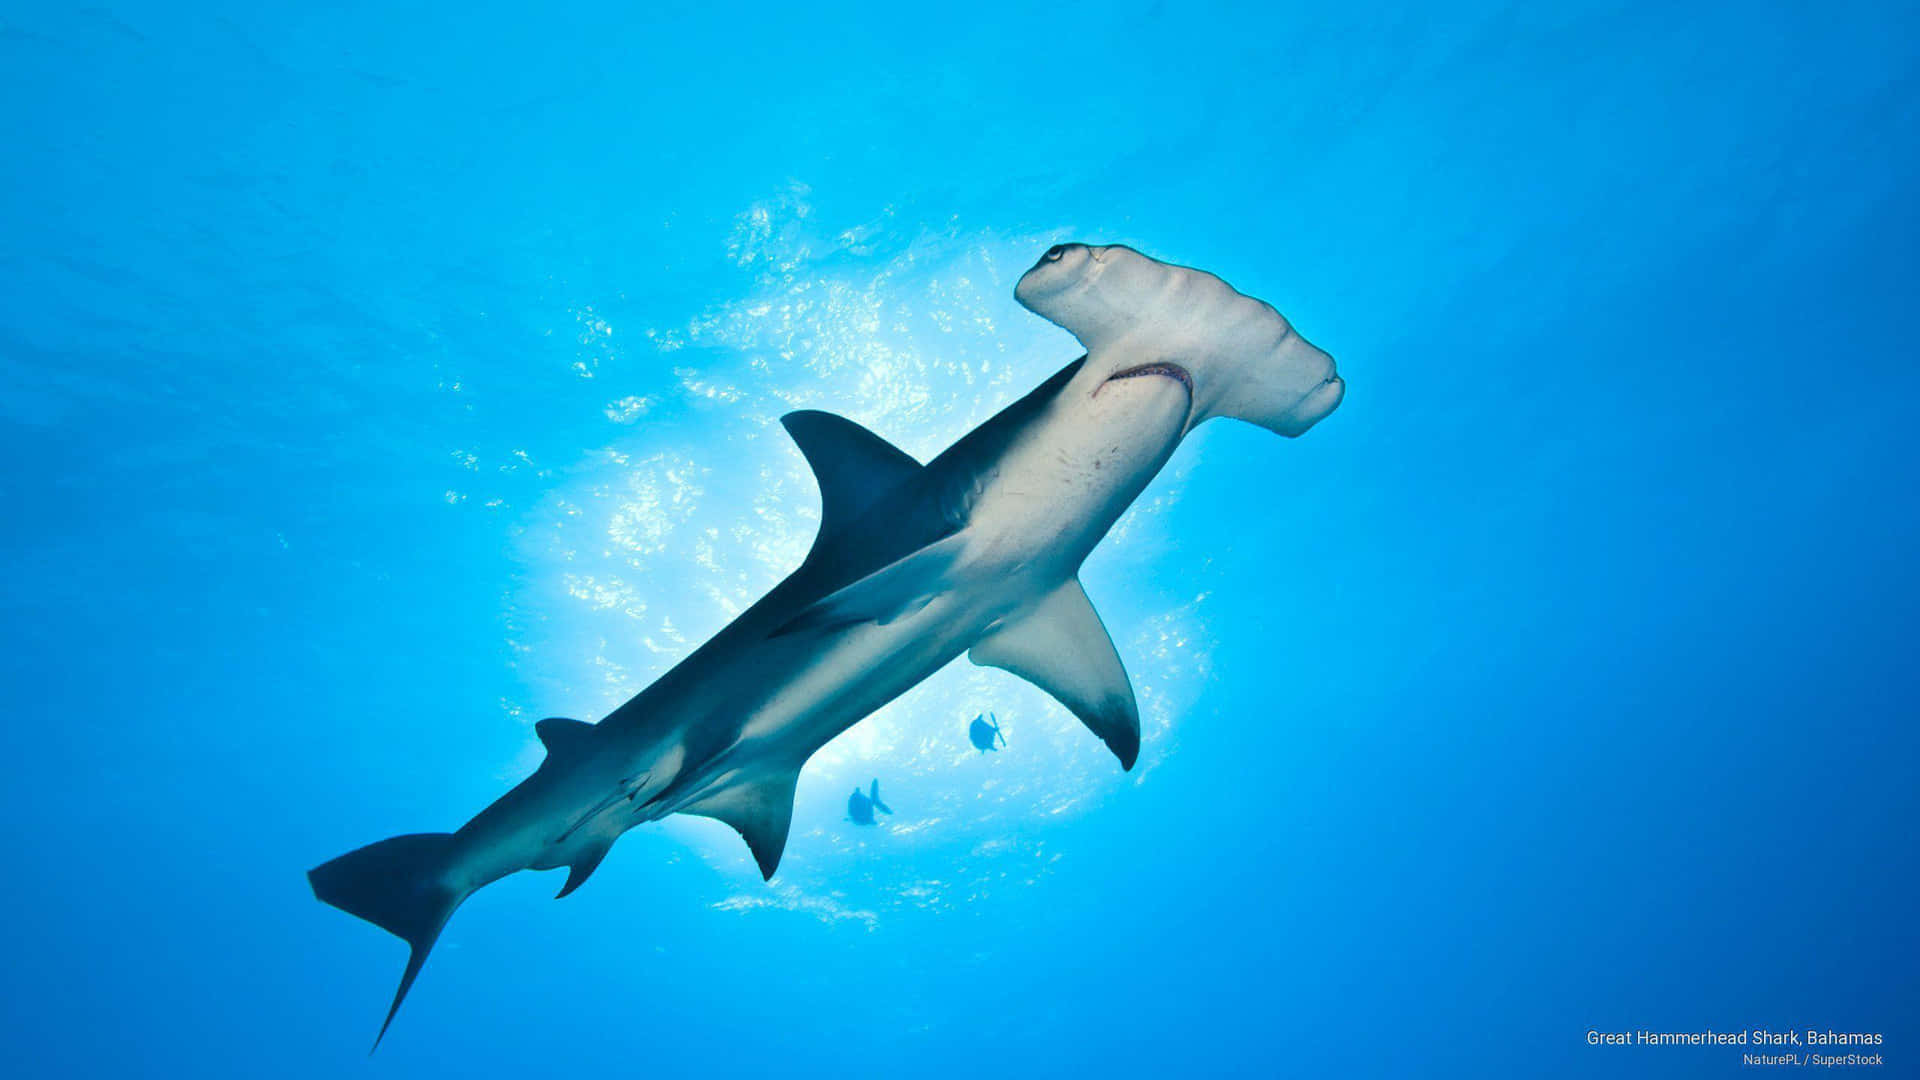 hammerhead shark wallpaper hd